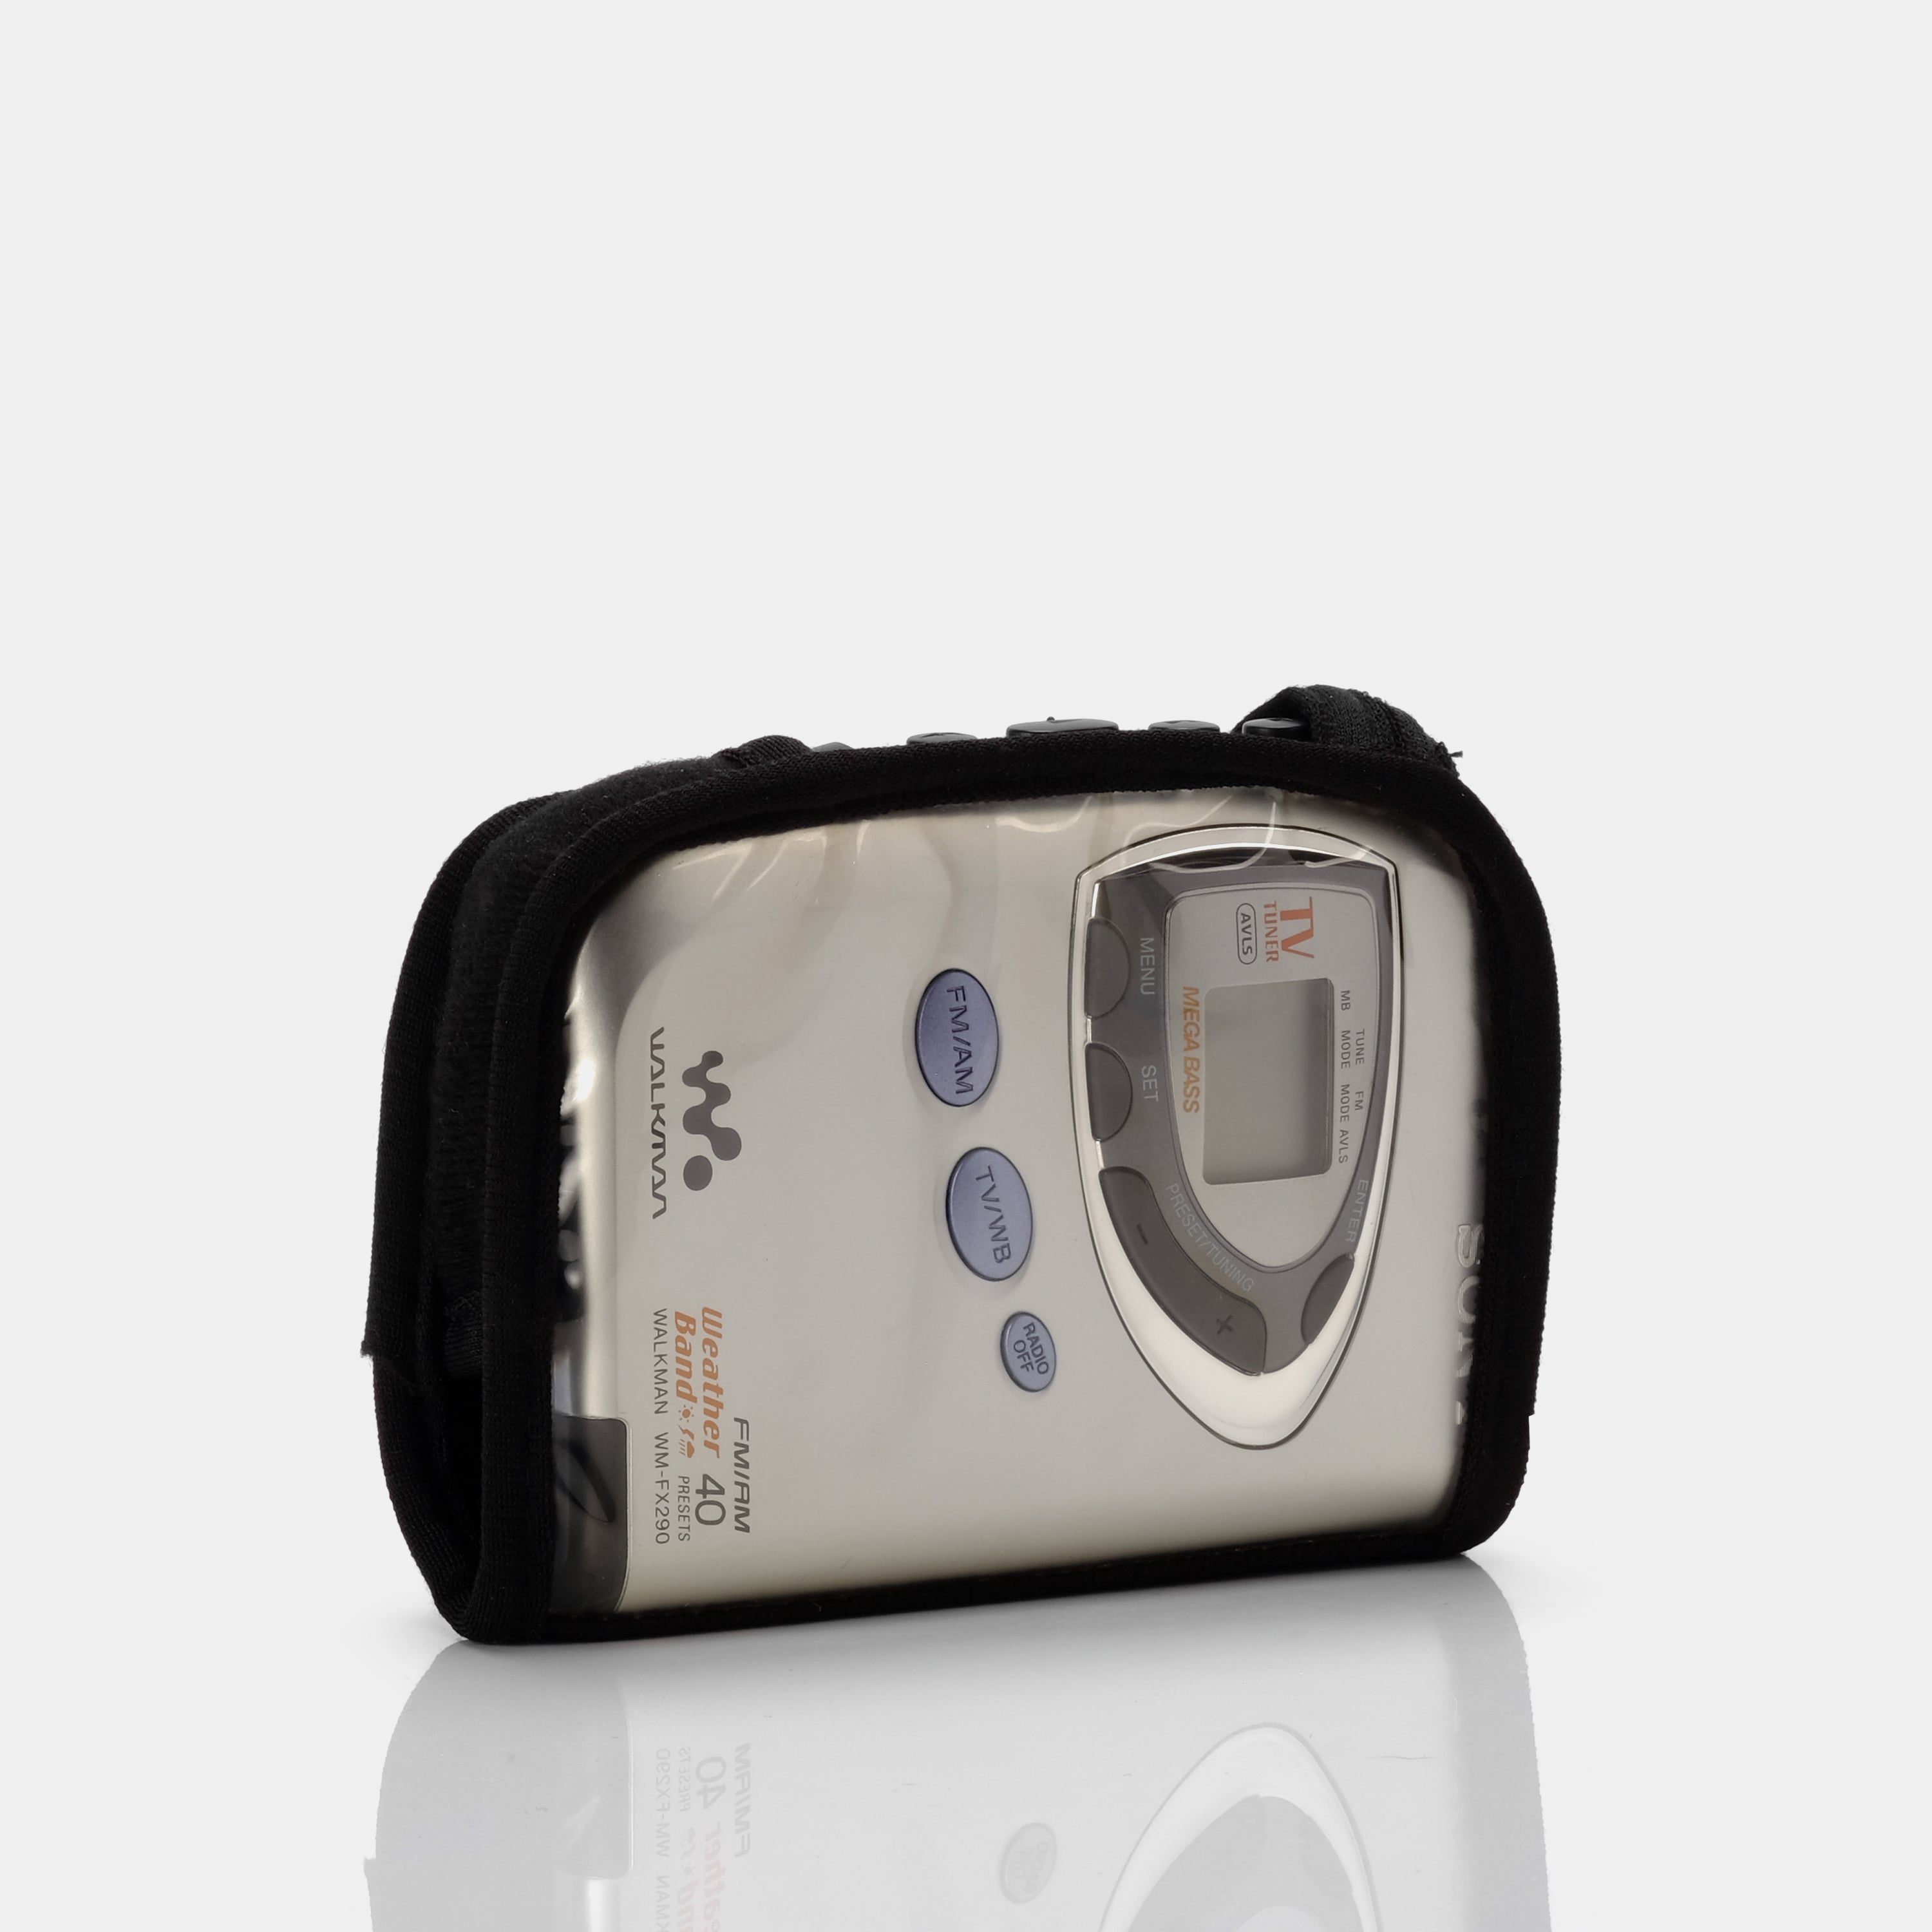 Sony Walkman WM-FX290 AM/FM Portable Cassette Player